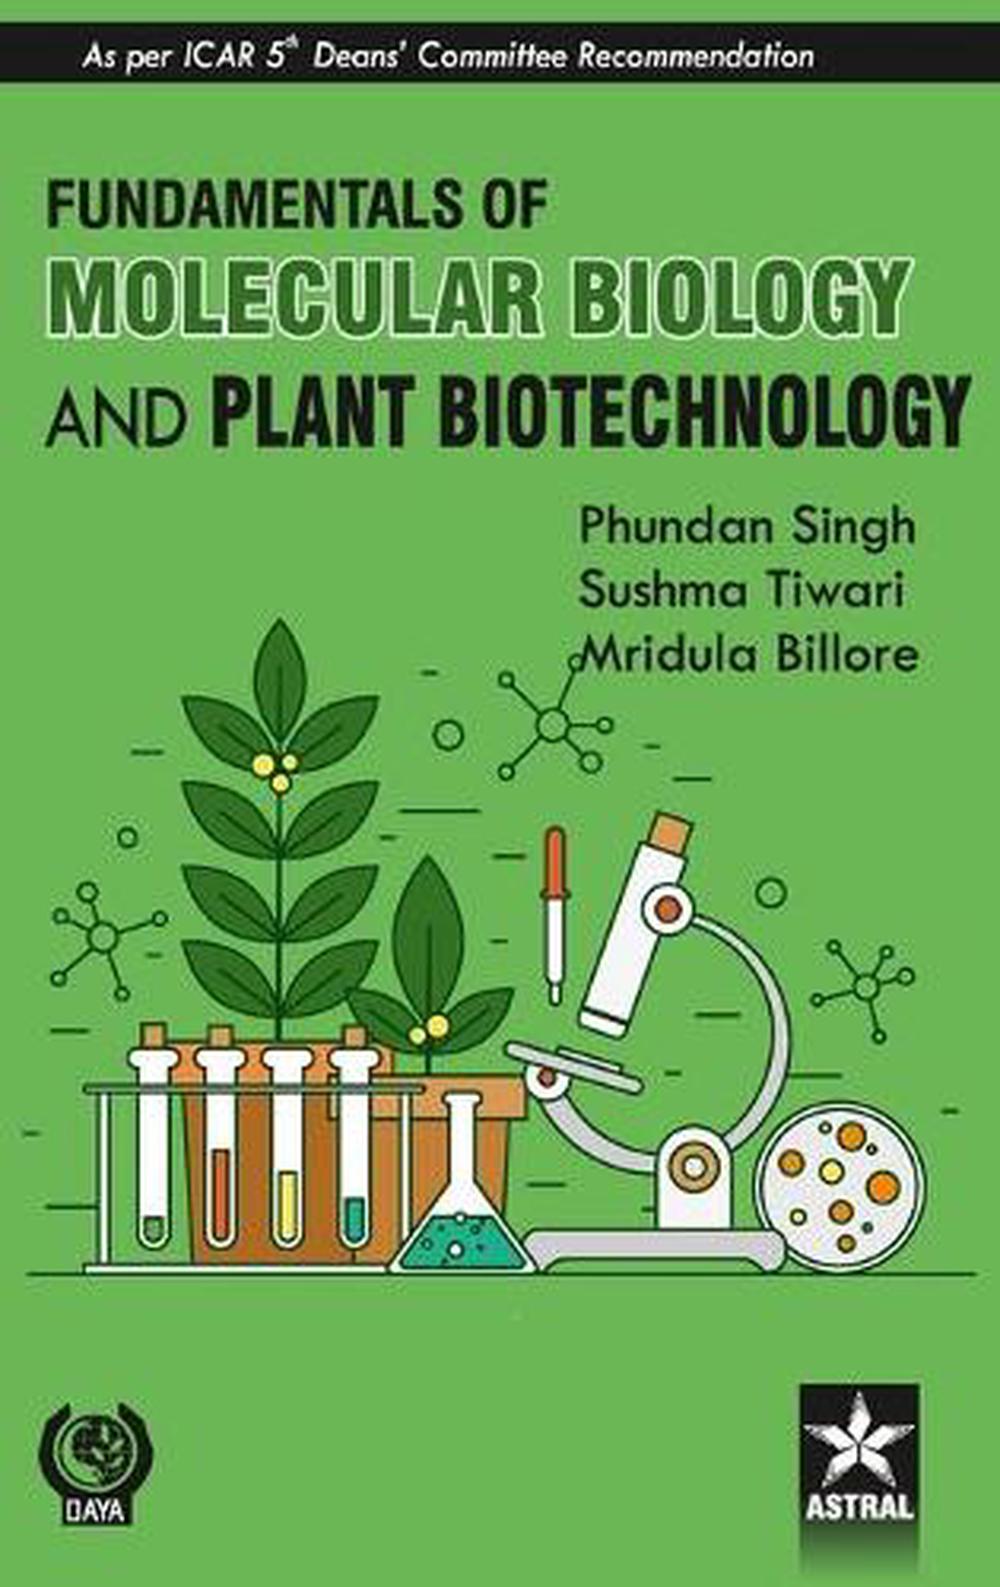 Fundamentals of Molecular Biology and Plant Biotechnology by Phundan